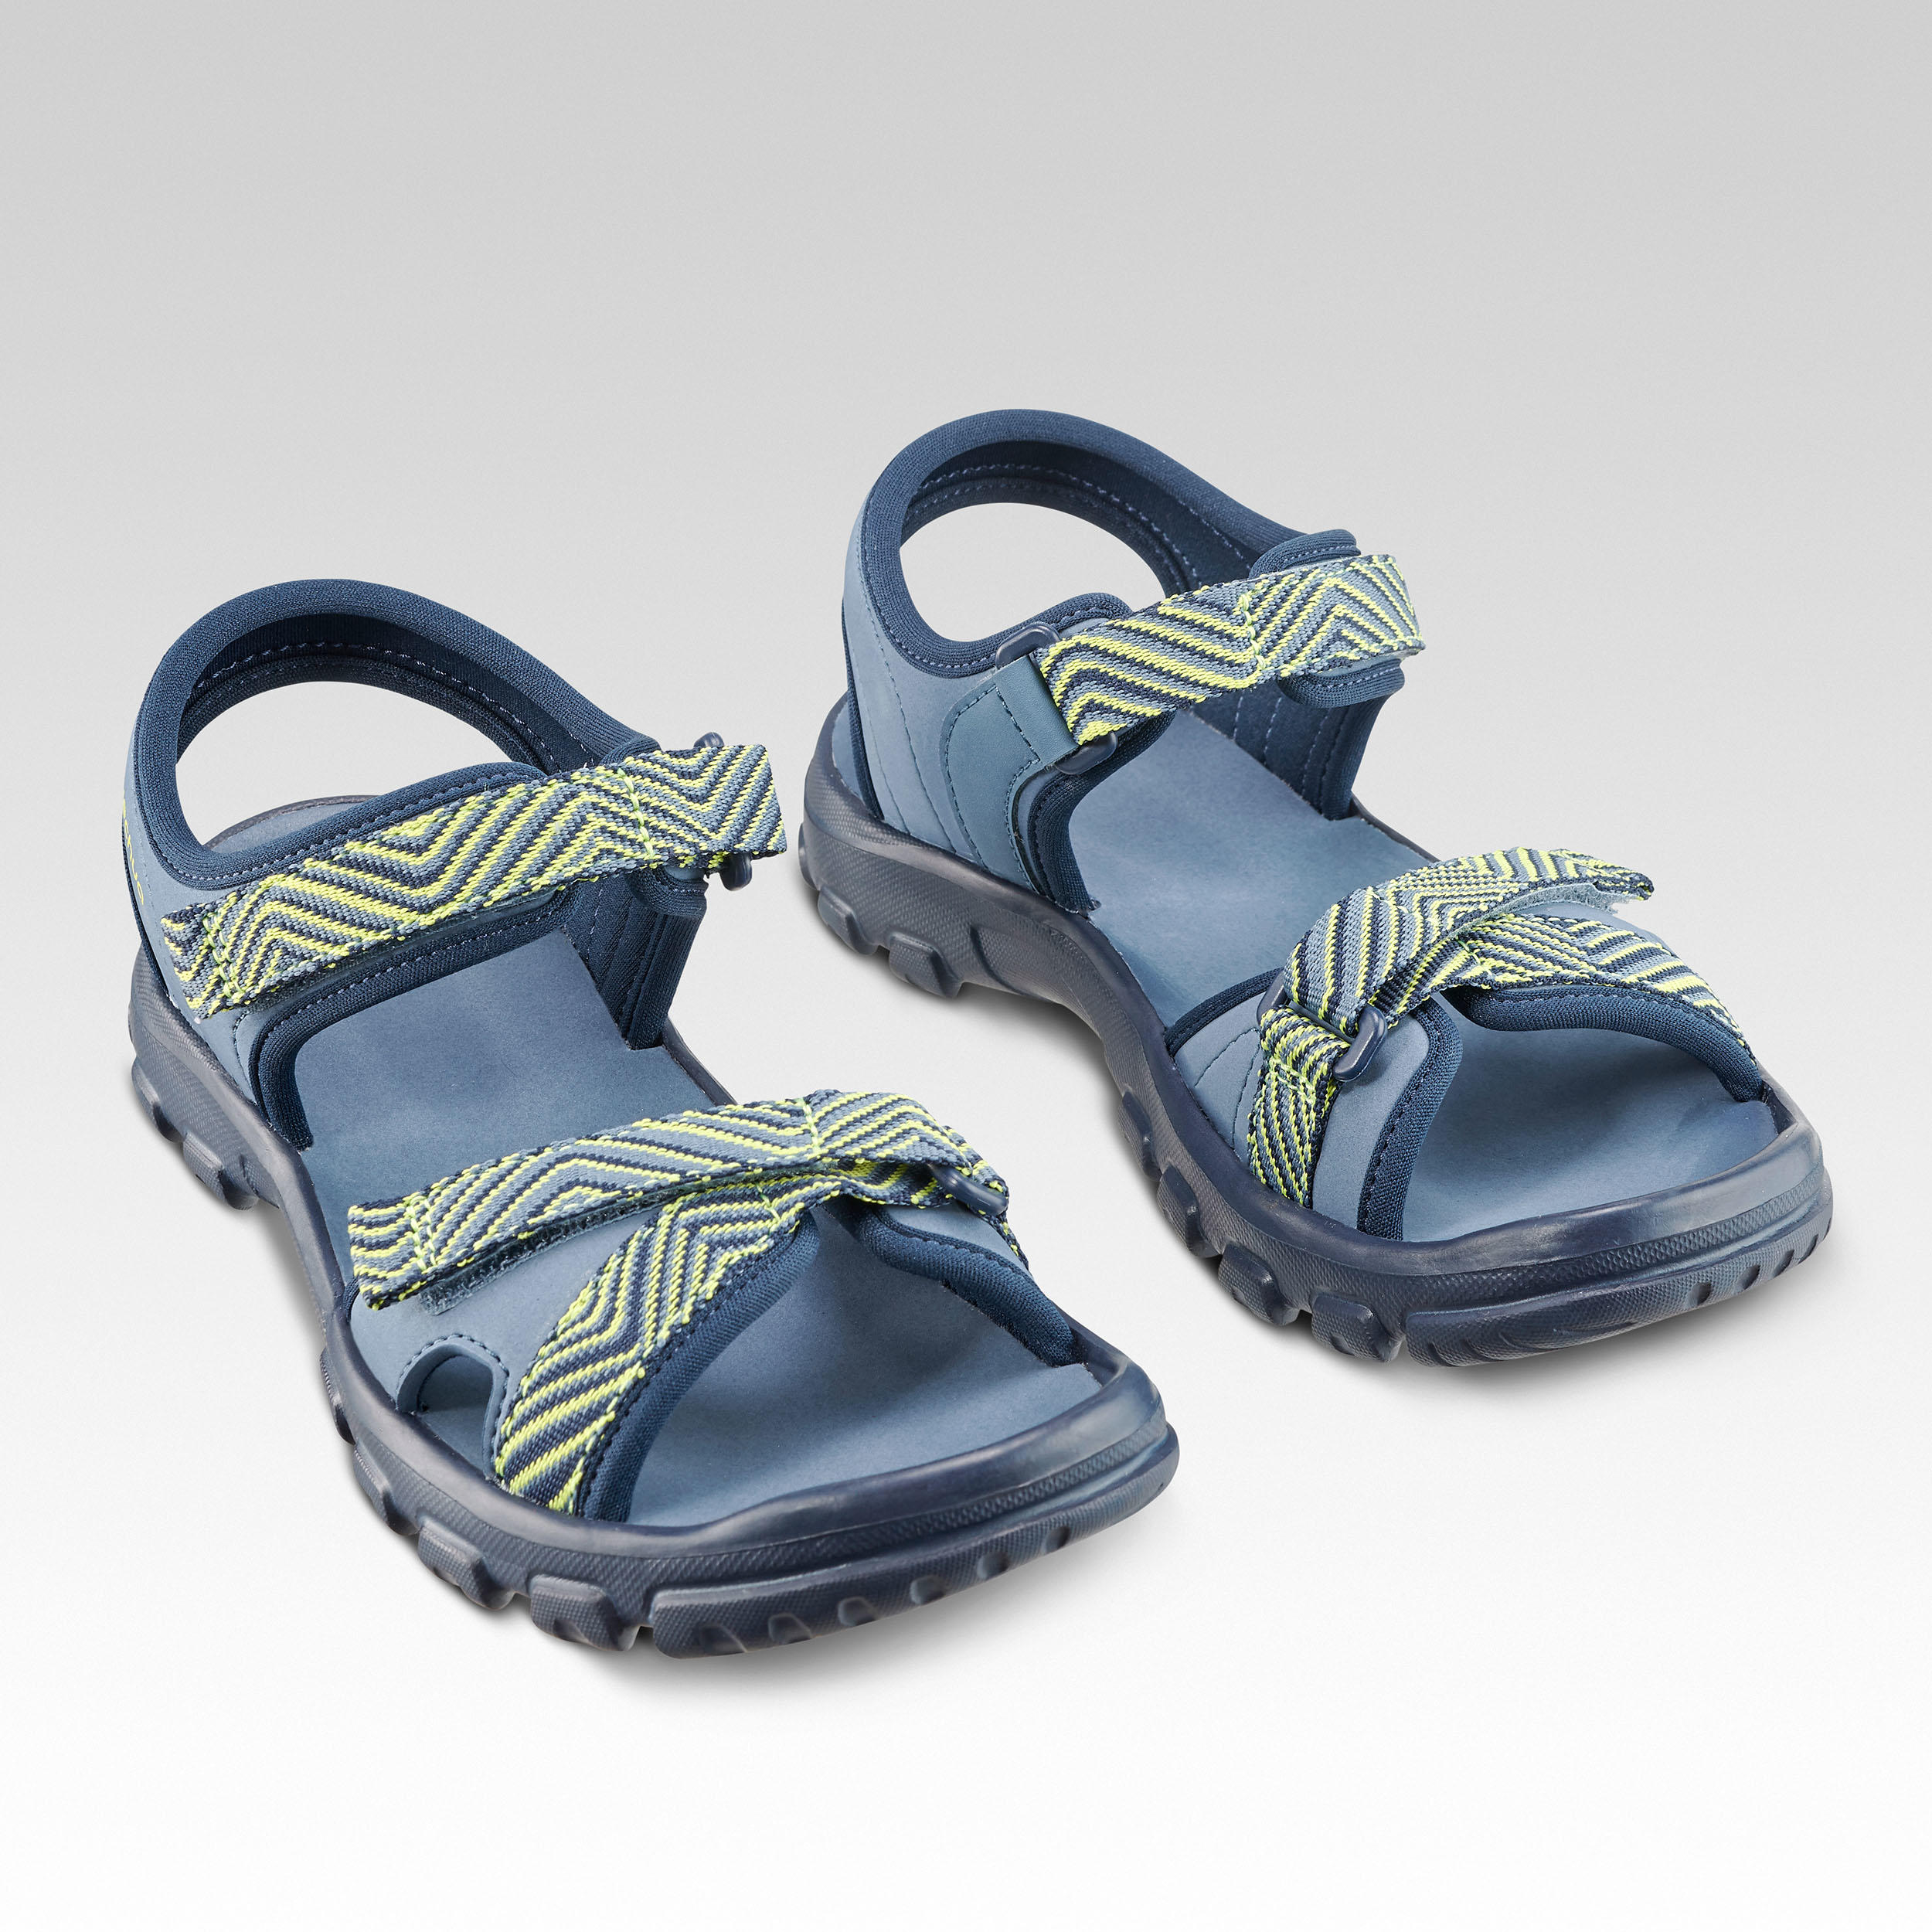 Kids' Hiking Sandals - MH 100 Blue - QUECHUA